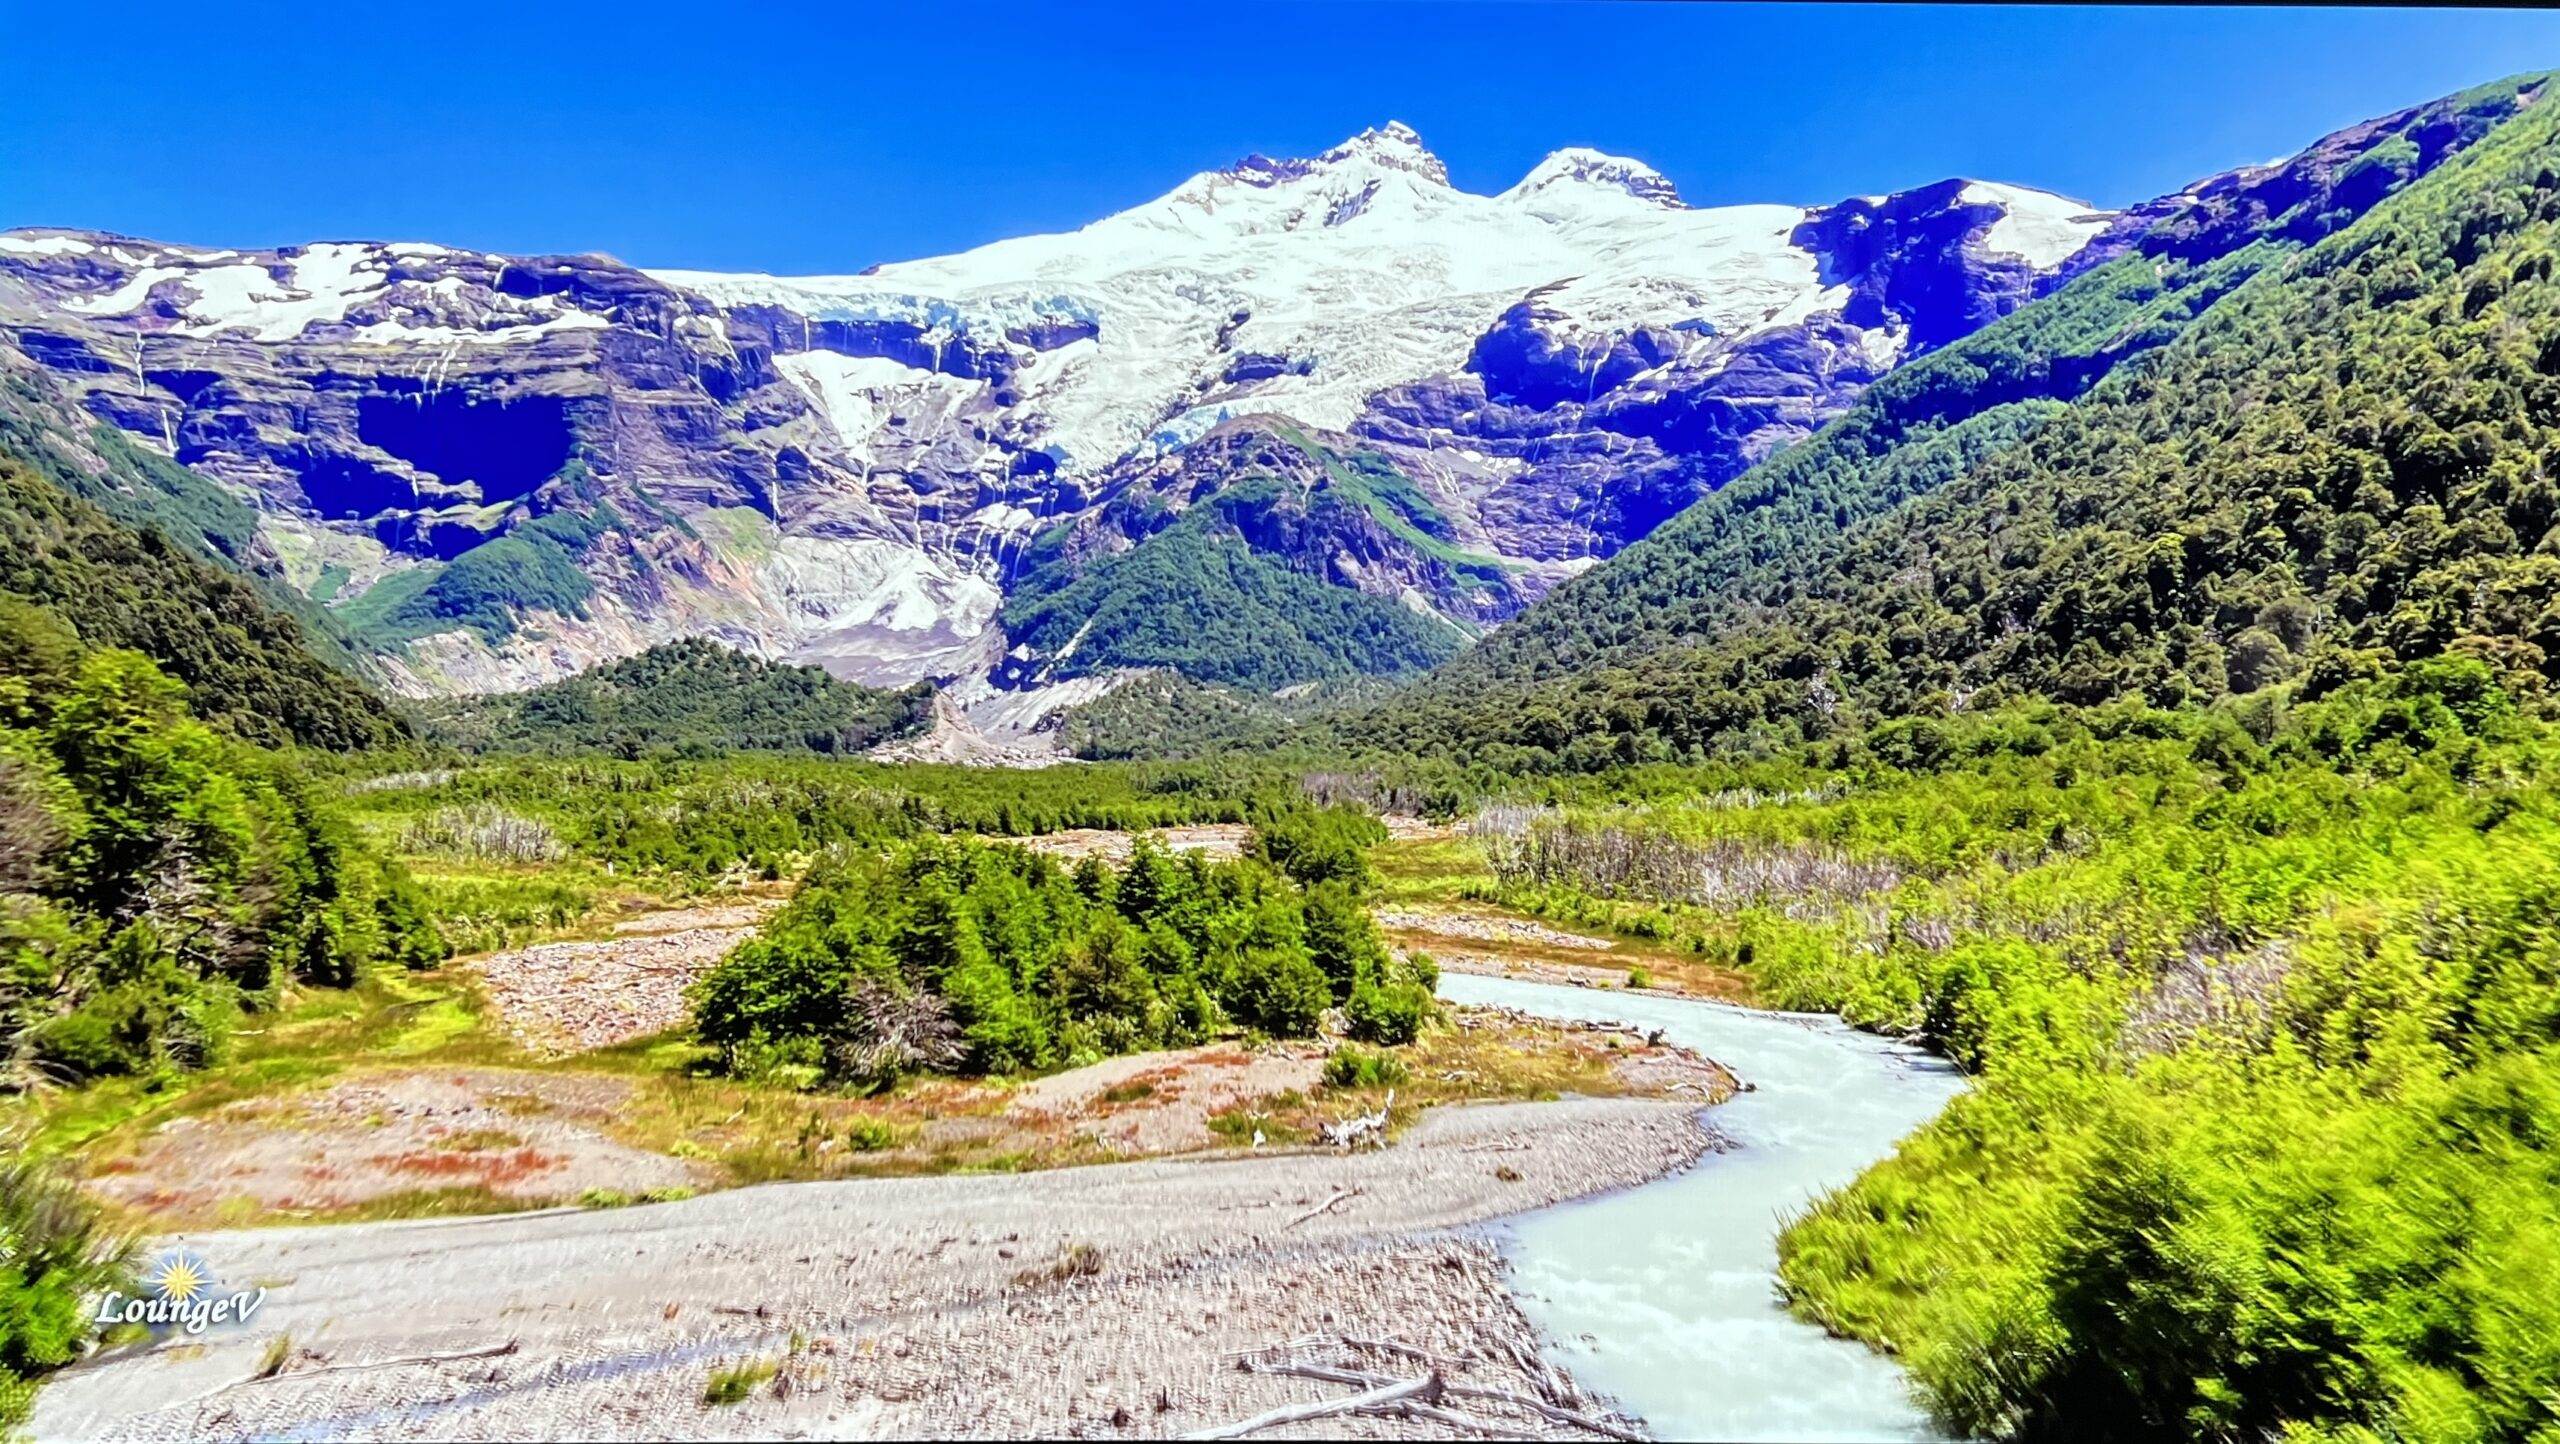 Kadr z filmu YouTube "Incredible Patagonia" po kalibracji 